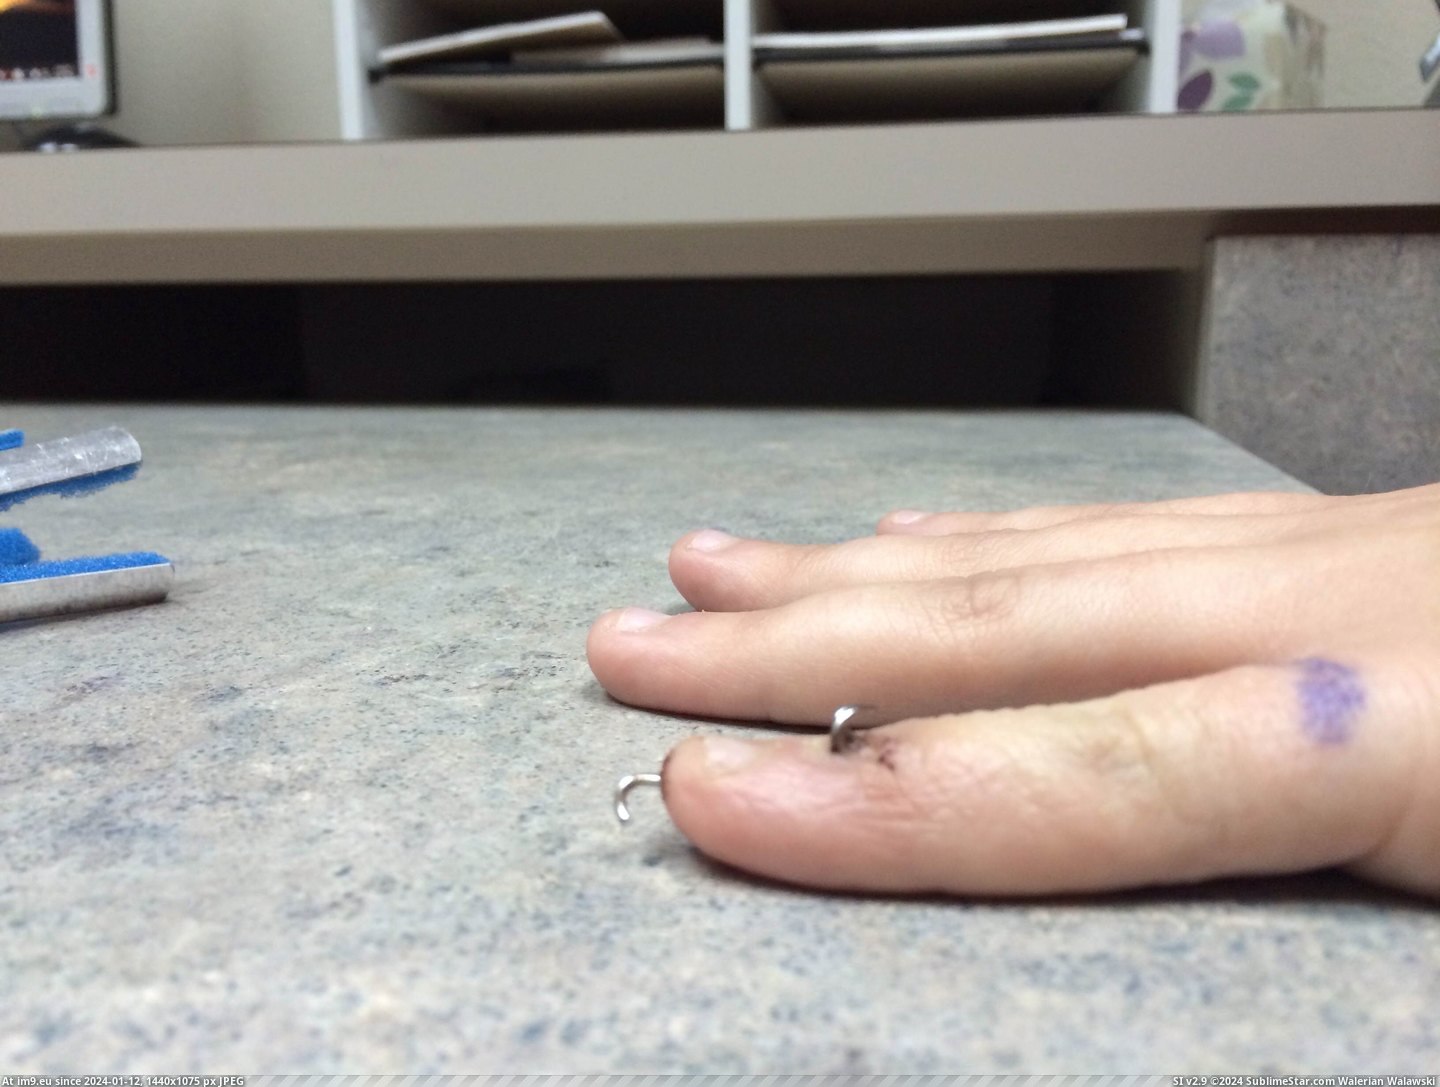 #Wtf #Wife #Pinky #Finger #Broken [Wtf] My Wife's Broken Pinky Finger 4 Pic. (Bild von album My r/WTF favs))